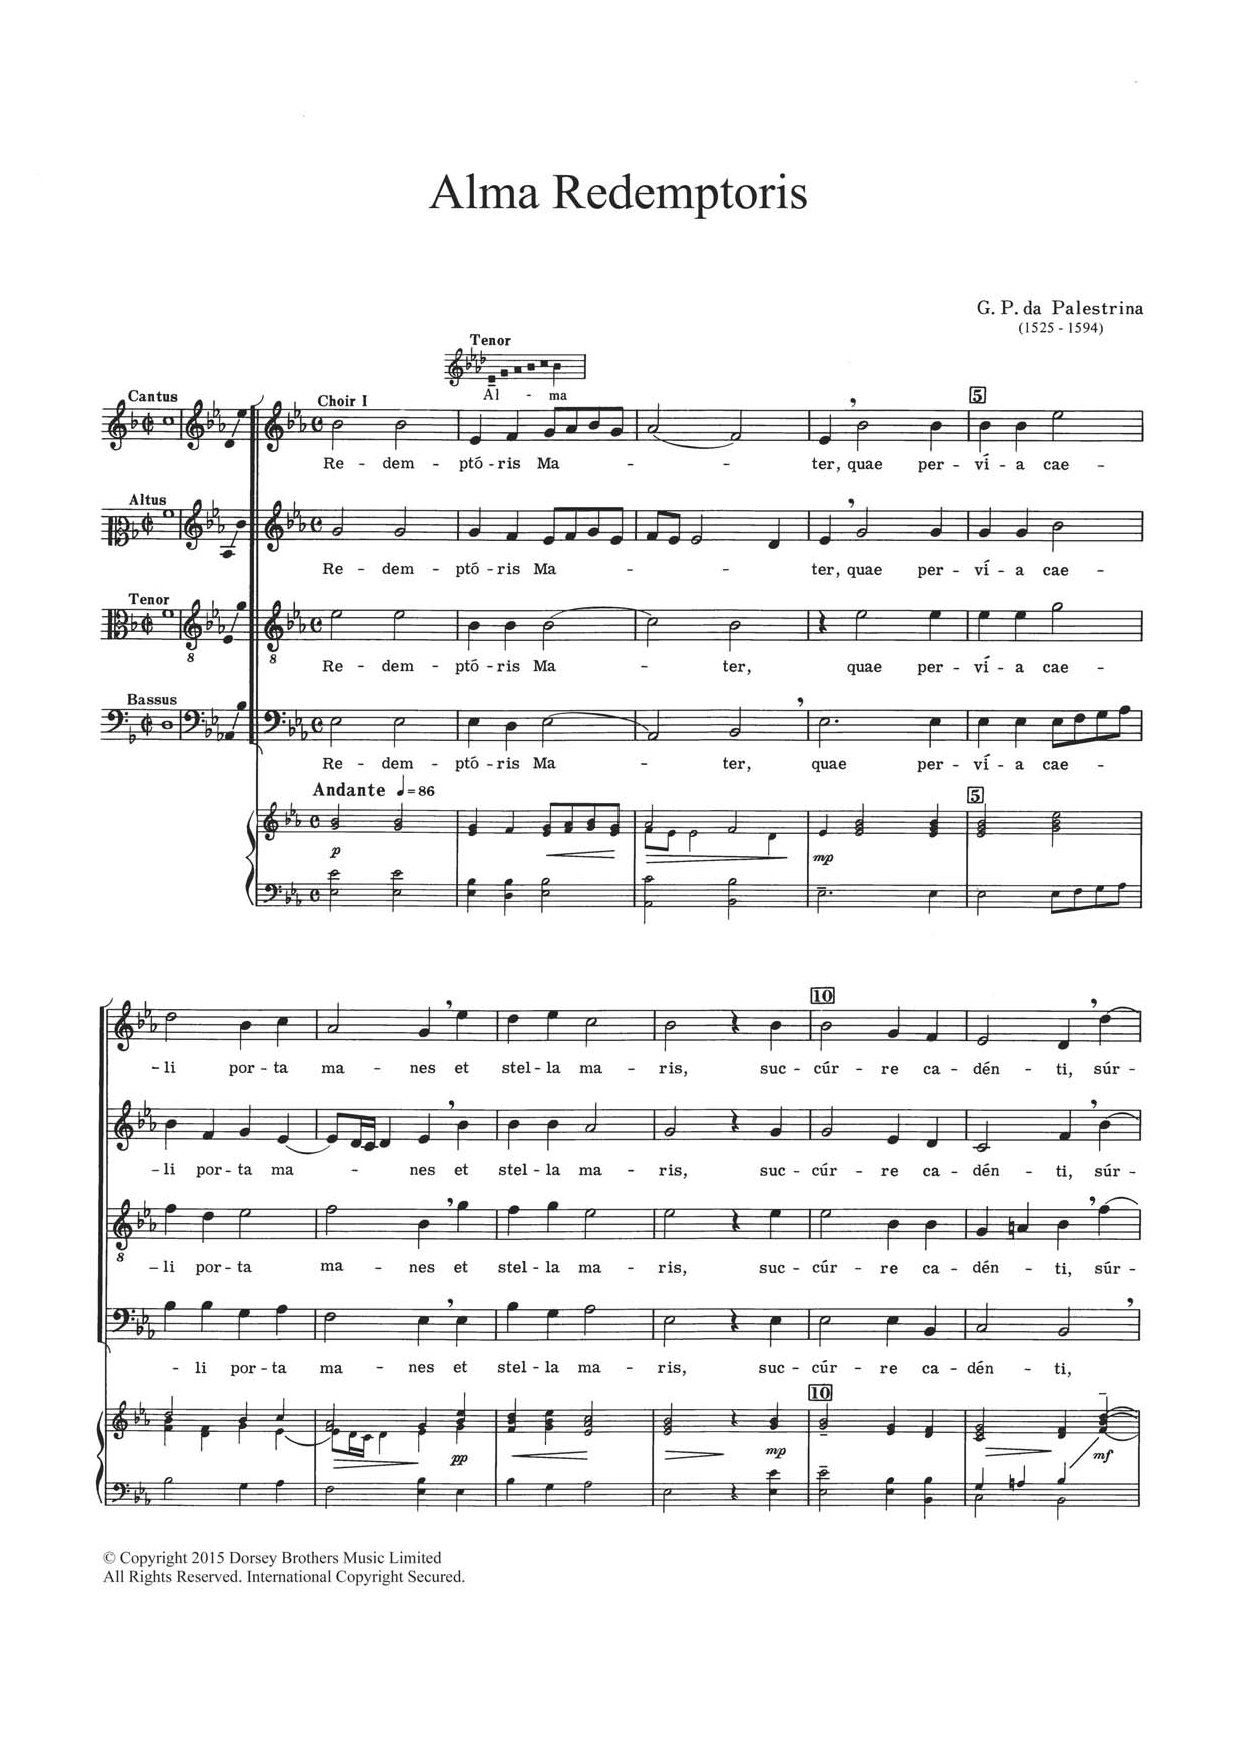 Download Giovanni Palestrina Alma Redemptoris Sheet Music